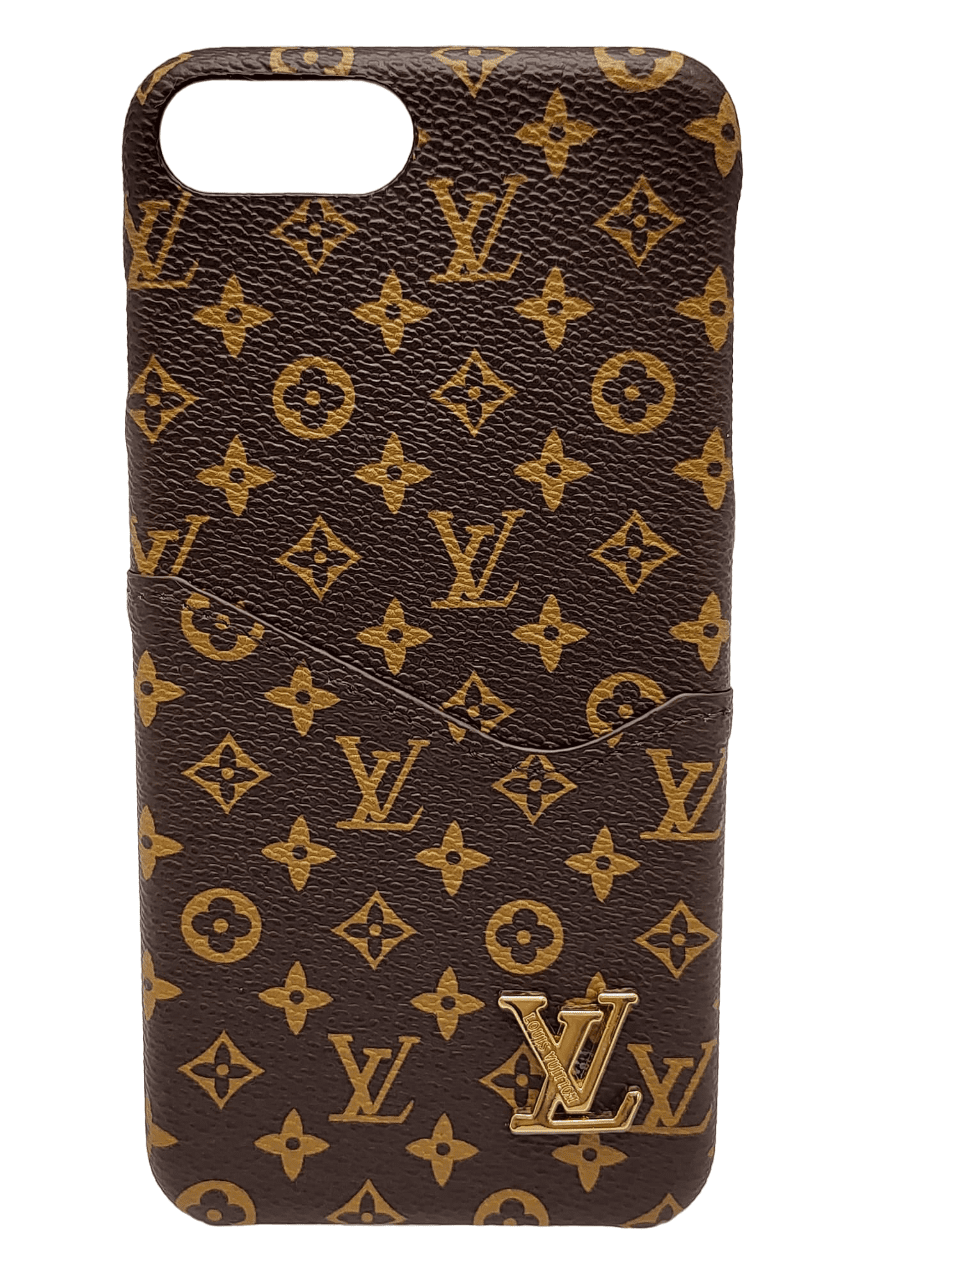 Capa Louis Vuitton Capas Celular Iphone